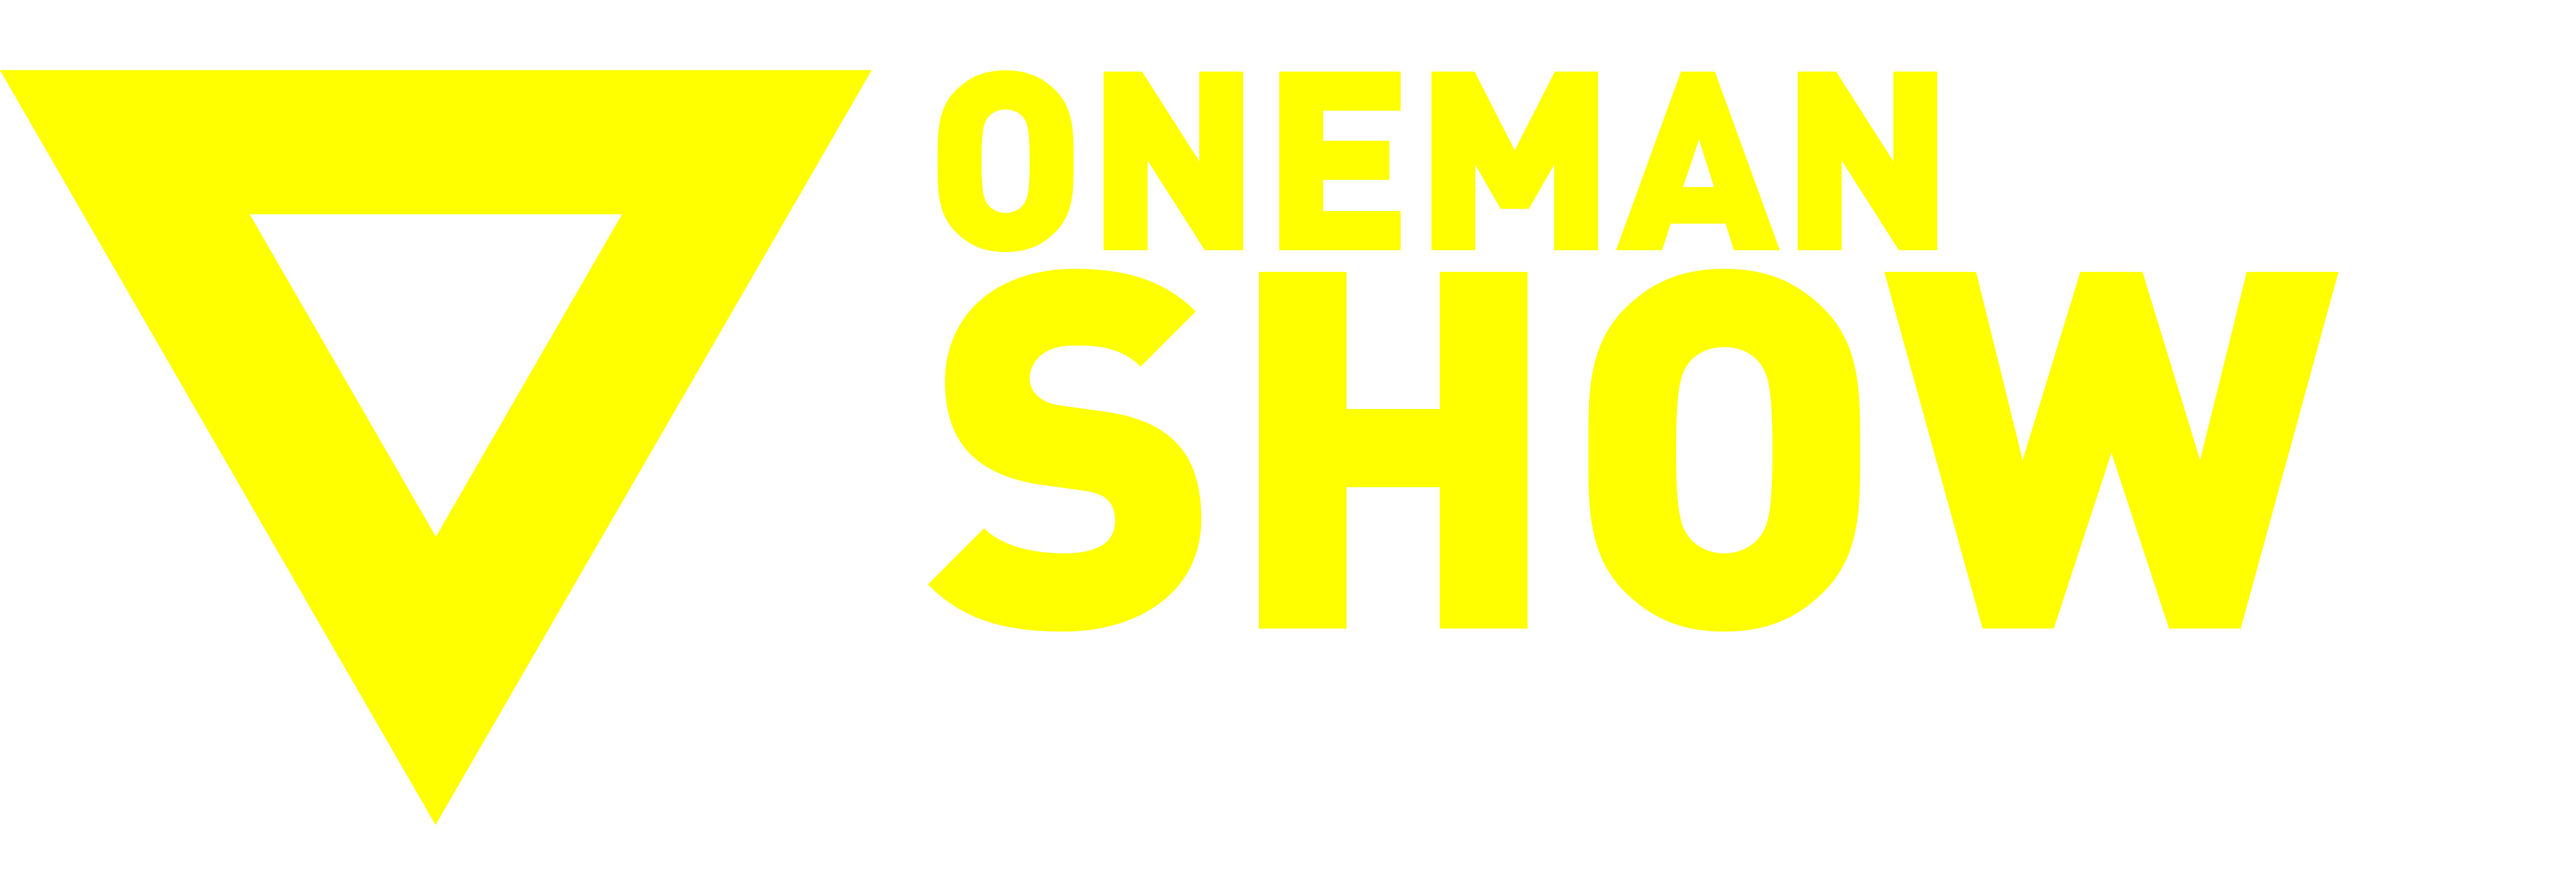 ONEMANSHOW JIM CARREY (2015)